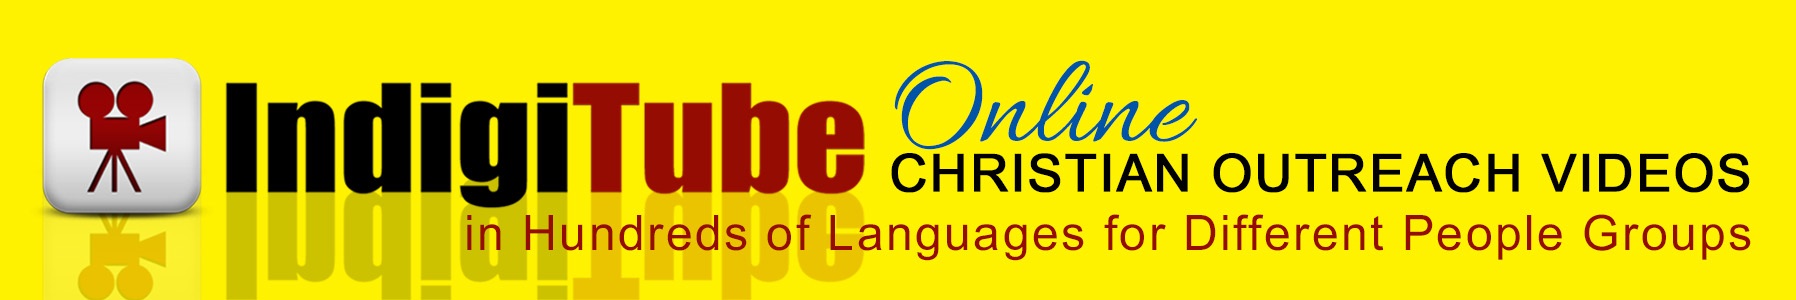 IndigiTube Online Christian Outreach Videos